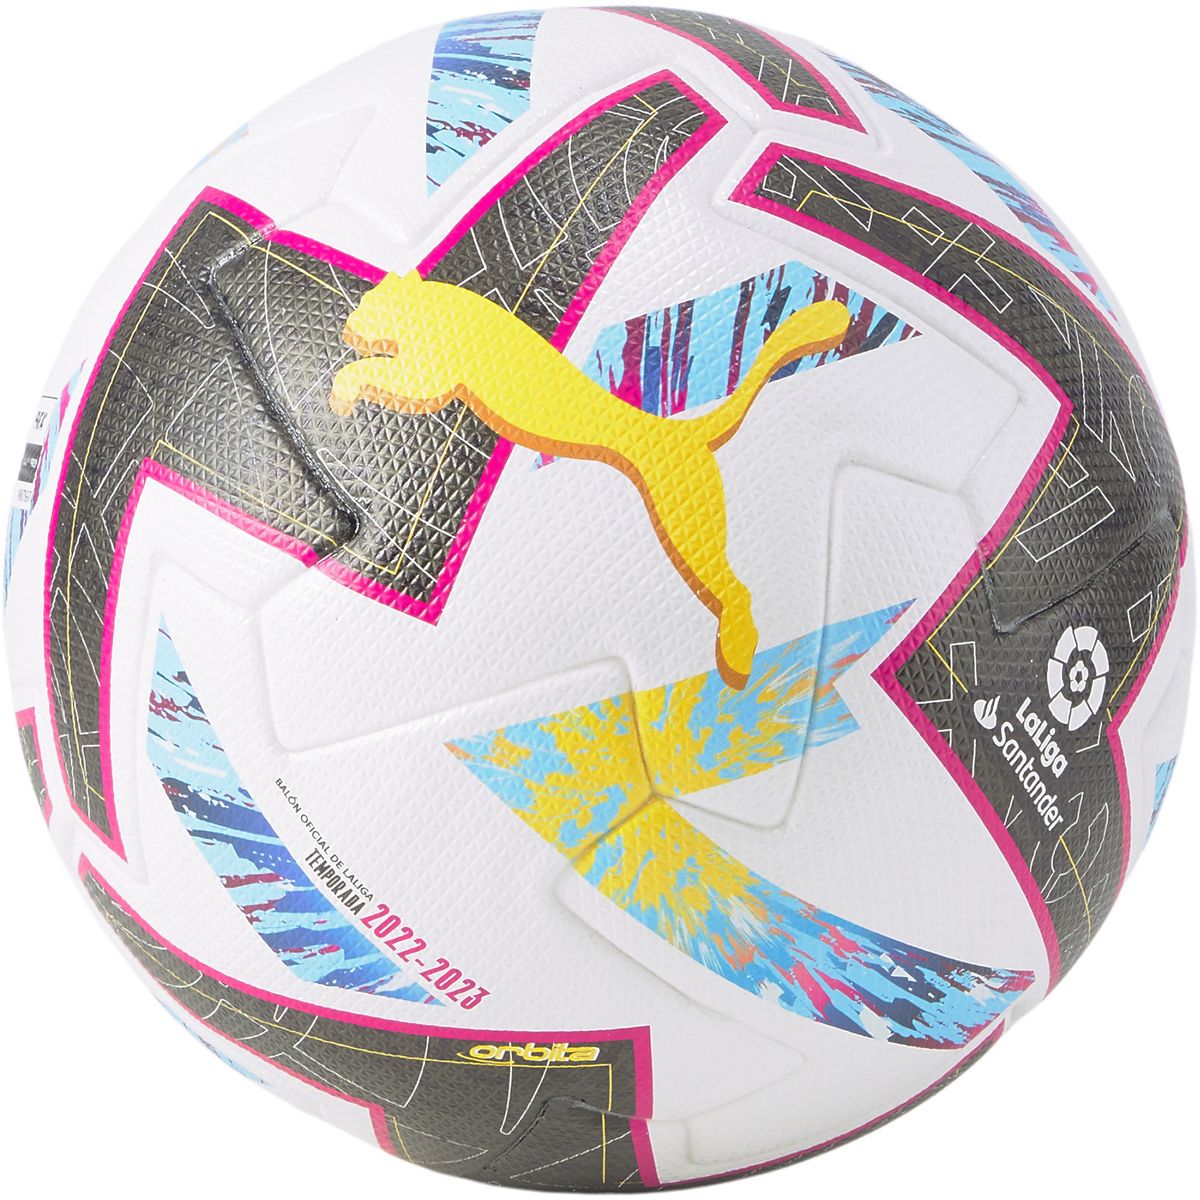 Puma Orbita LaLiga 1 (Fifa Quality Pro) WP Outdoor-Fußball